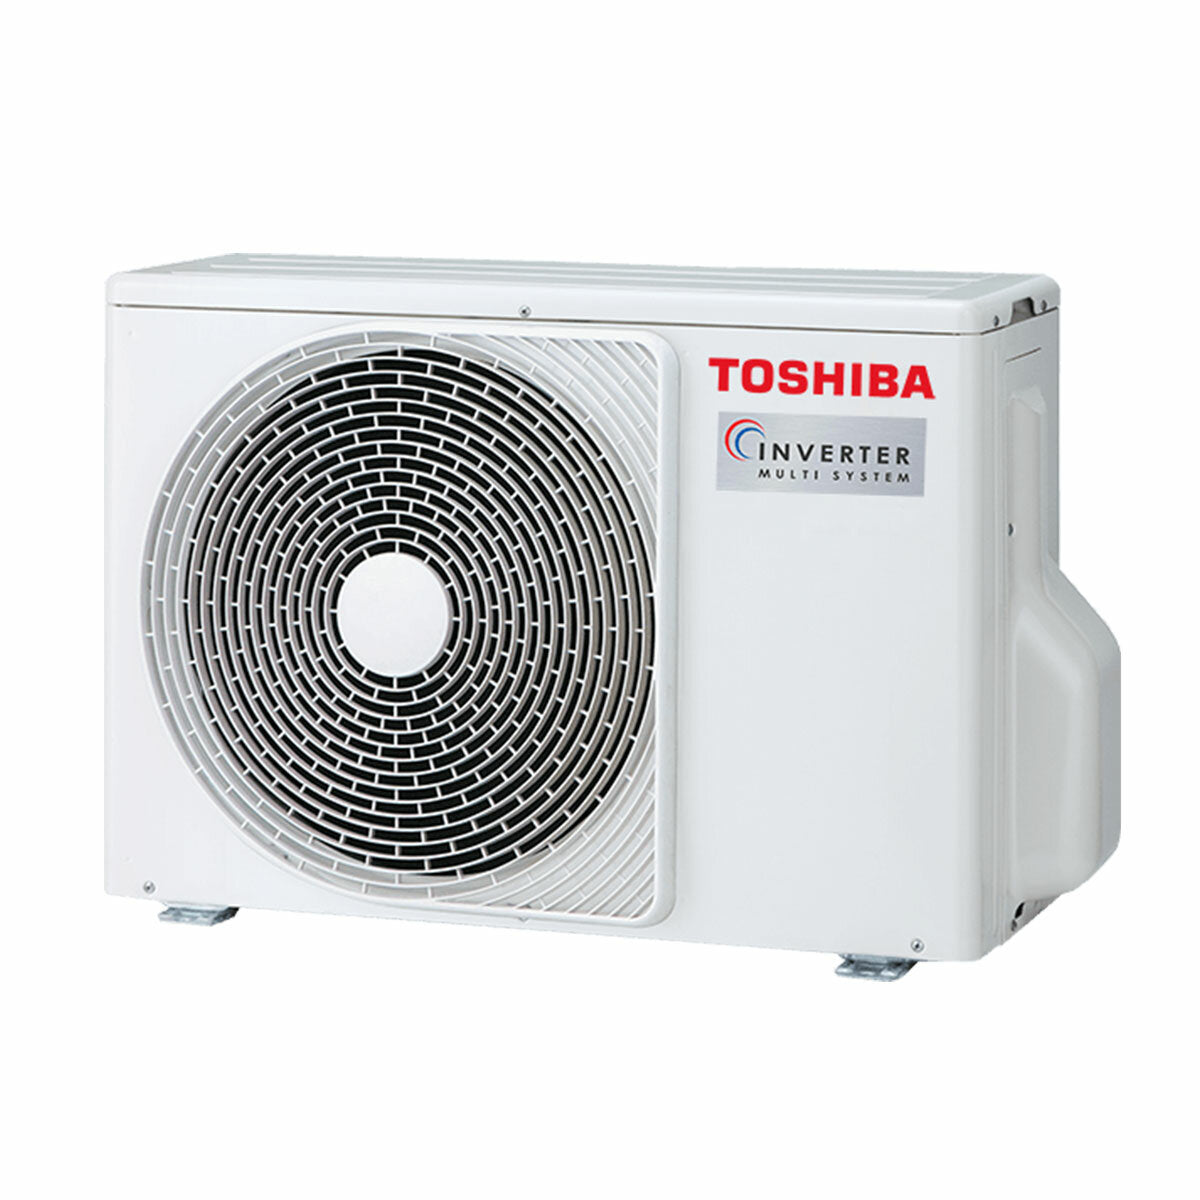 Toshiba ducted air conditioner U2 trial split 9000+9000+9000 BTU inverter A+++ external unit 5.2 kW